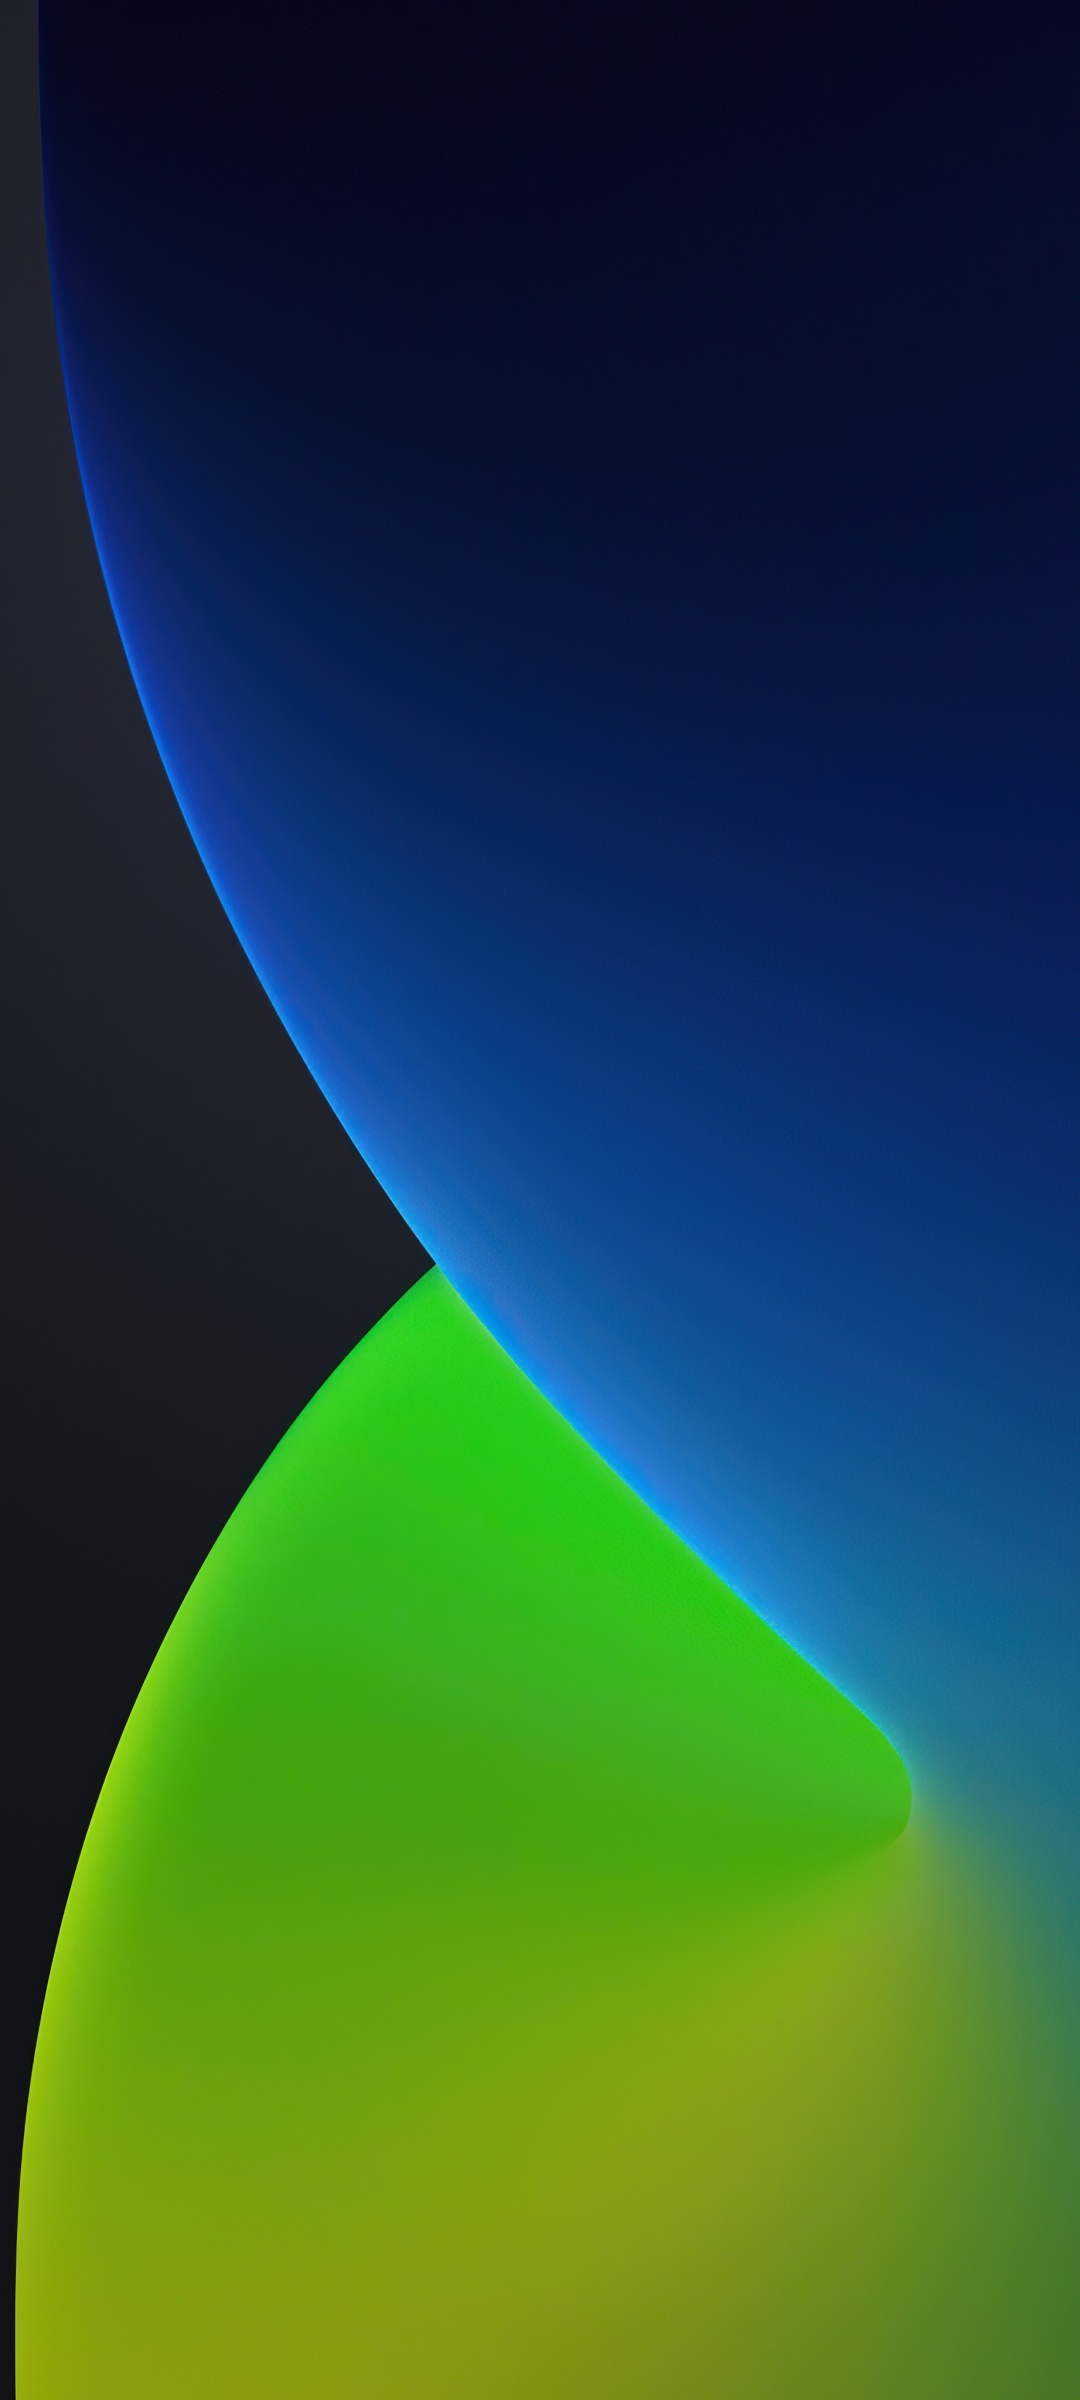 iOS 14 Wallpaper 4K, WWDC, 2020, iPhone 12, iPadOS, Dark, Green, Blue